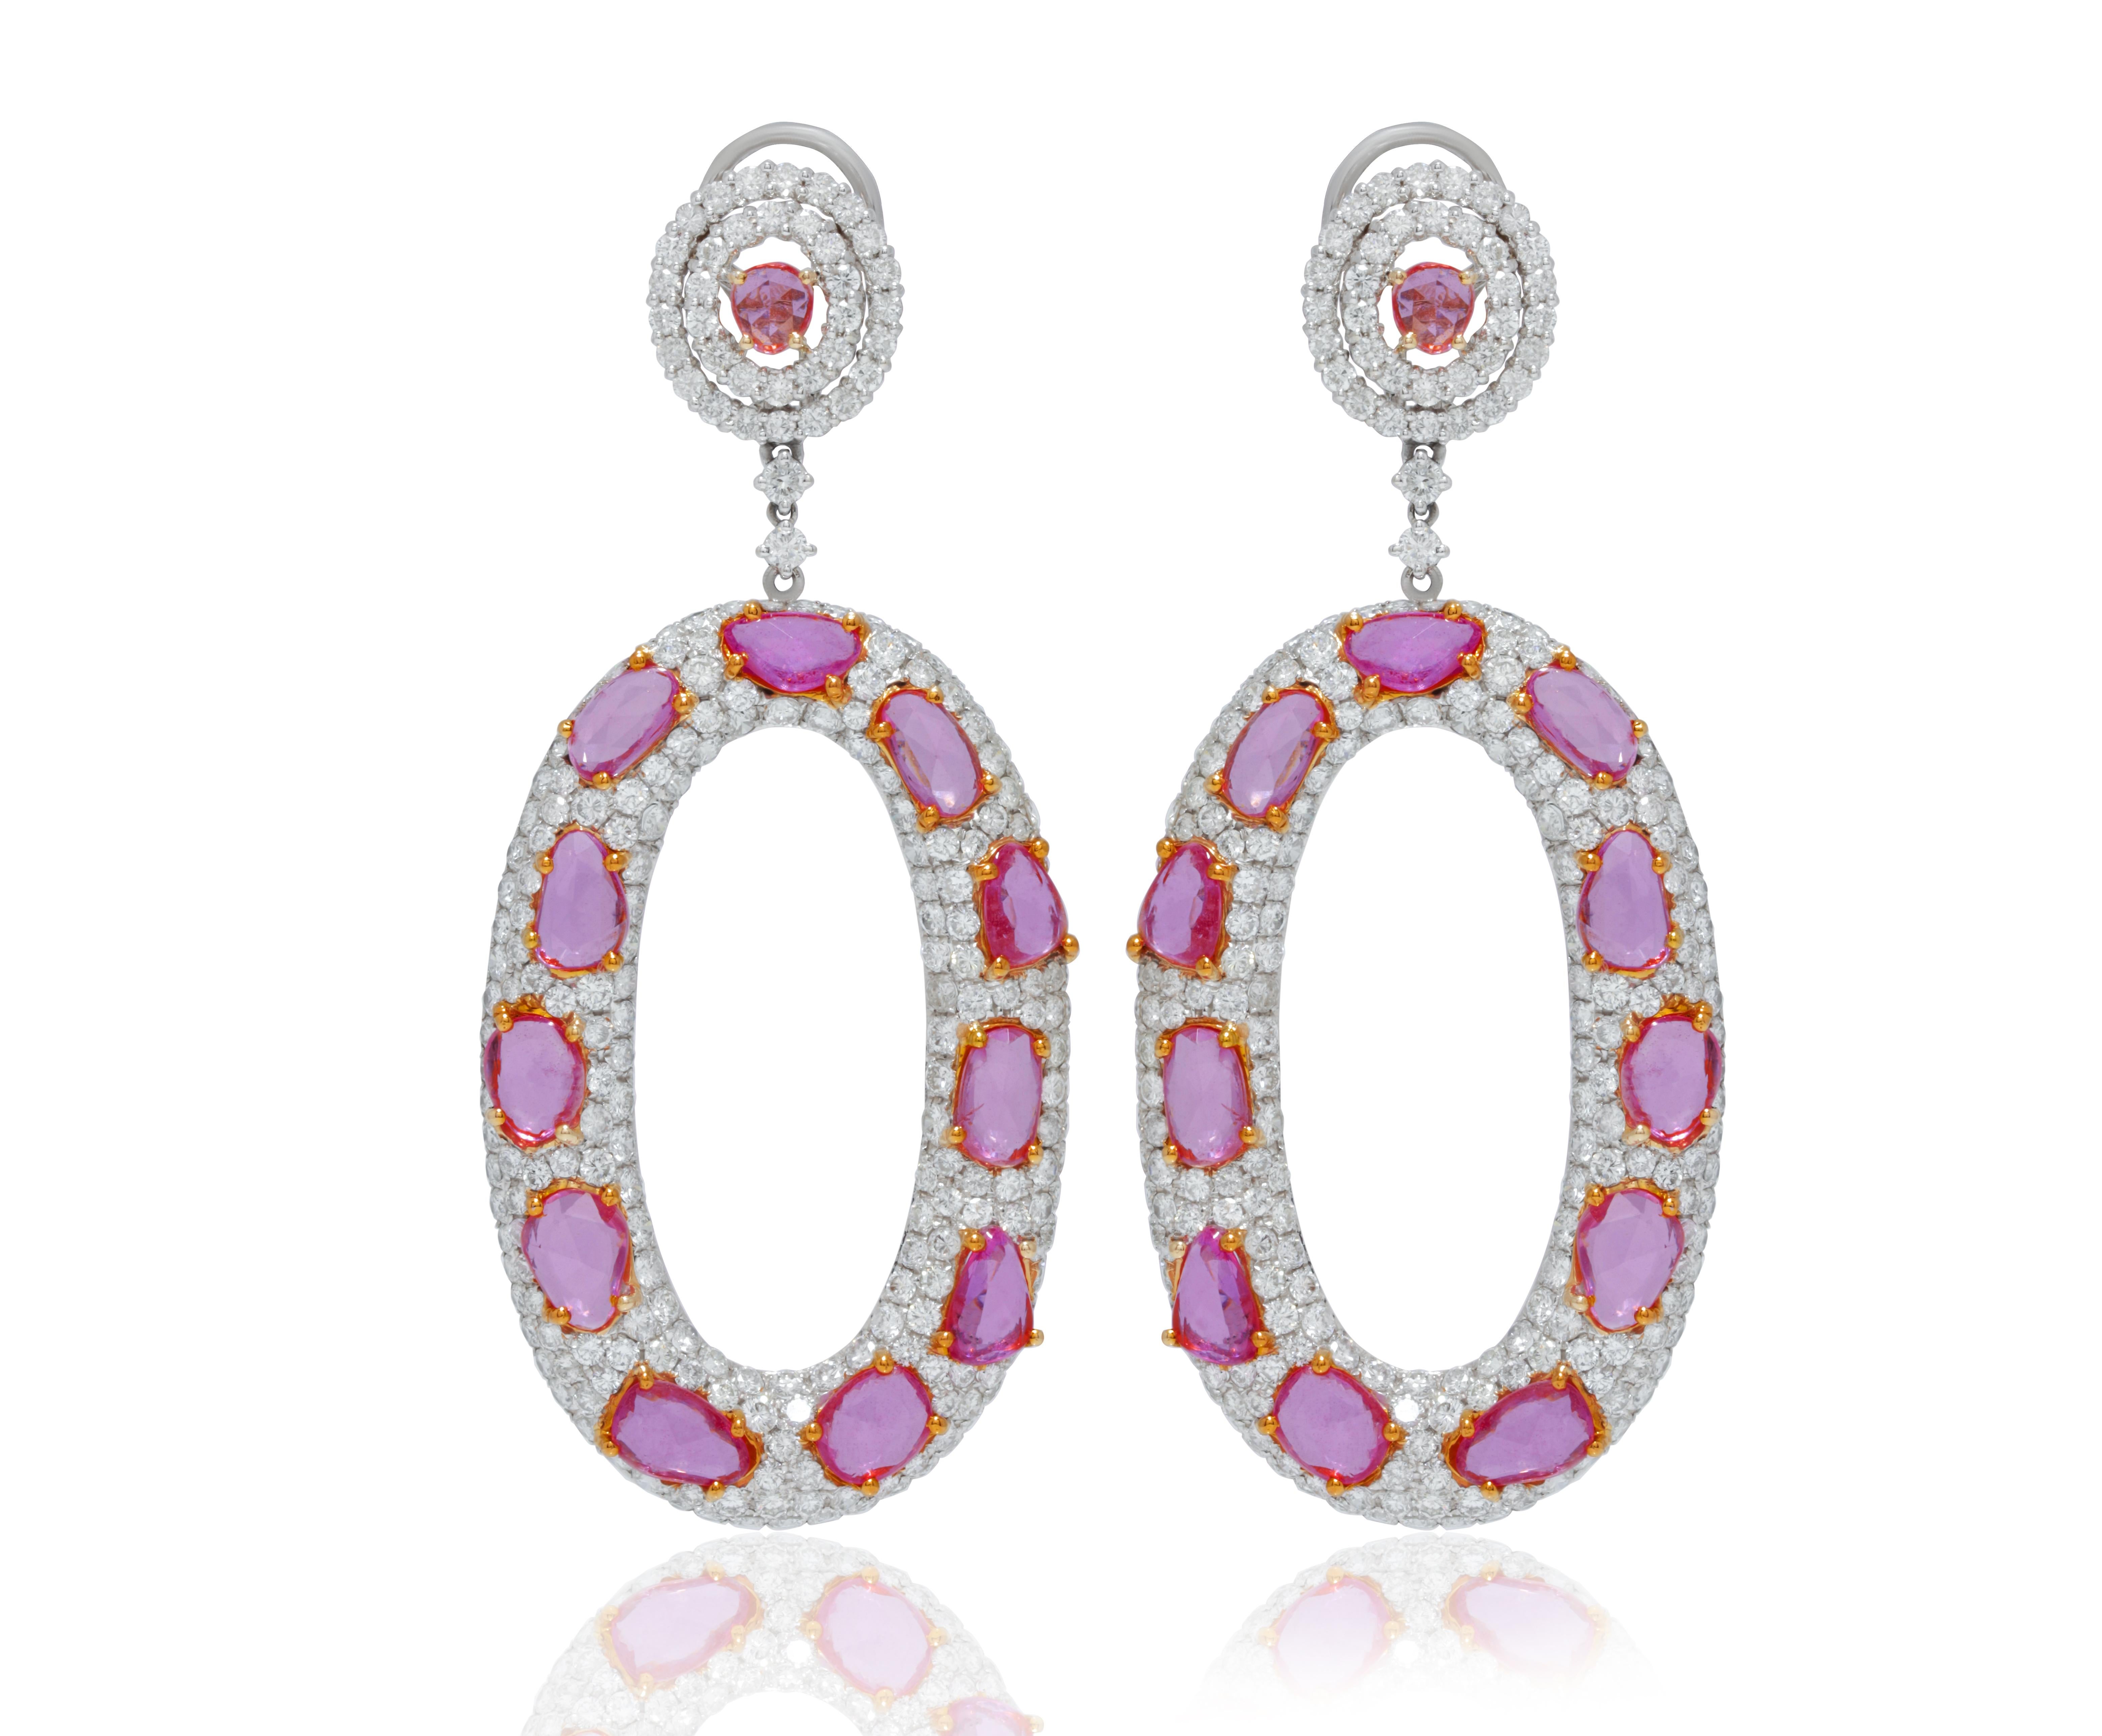 18k White Gold Pink Sapphire And Diamond Earrings Features 12.62cts Of Pink Sapphires With 10.85cts Of Diamonds
